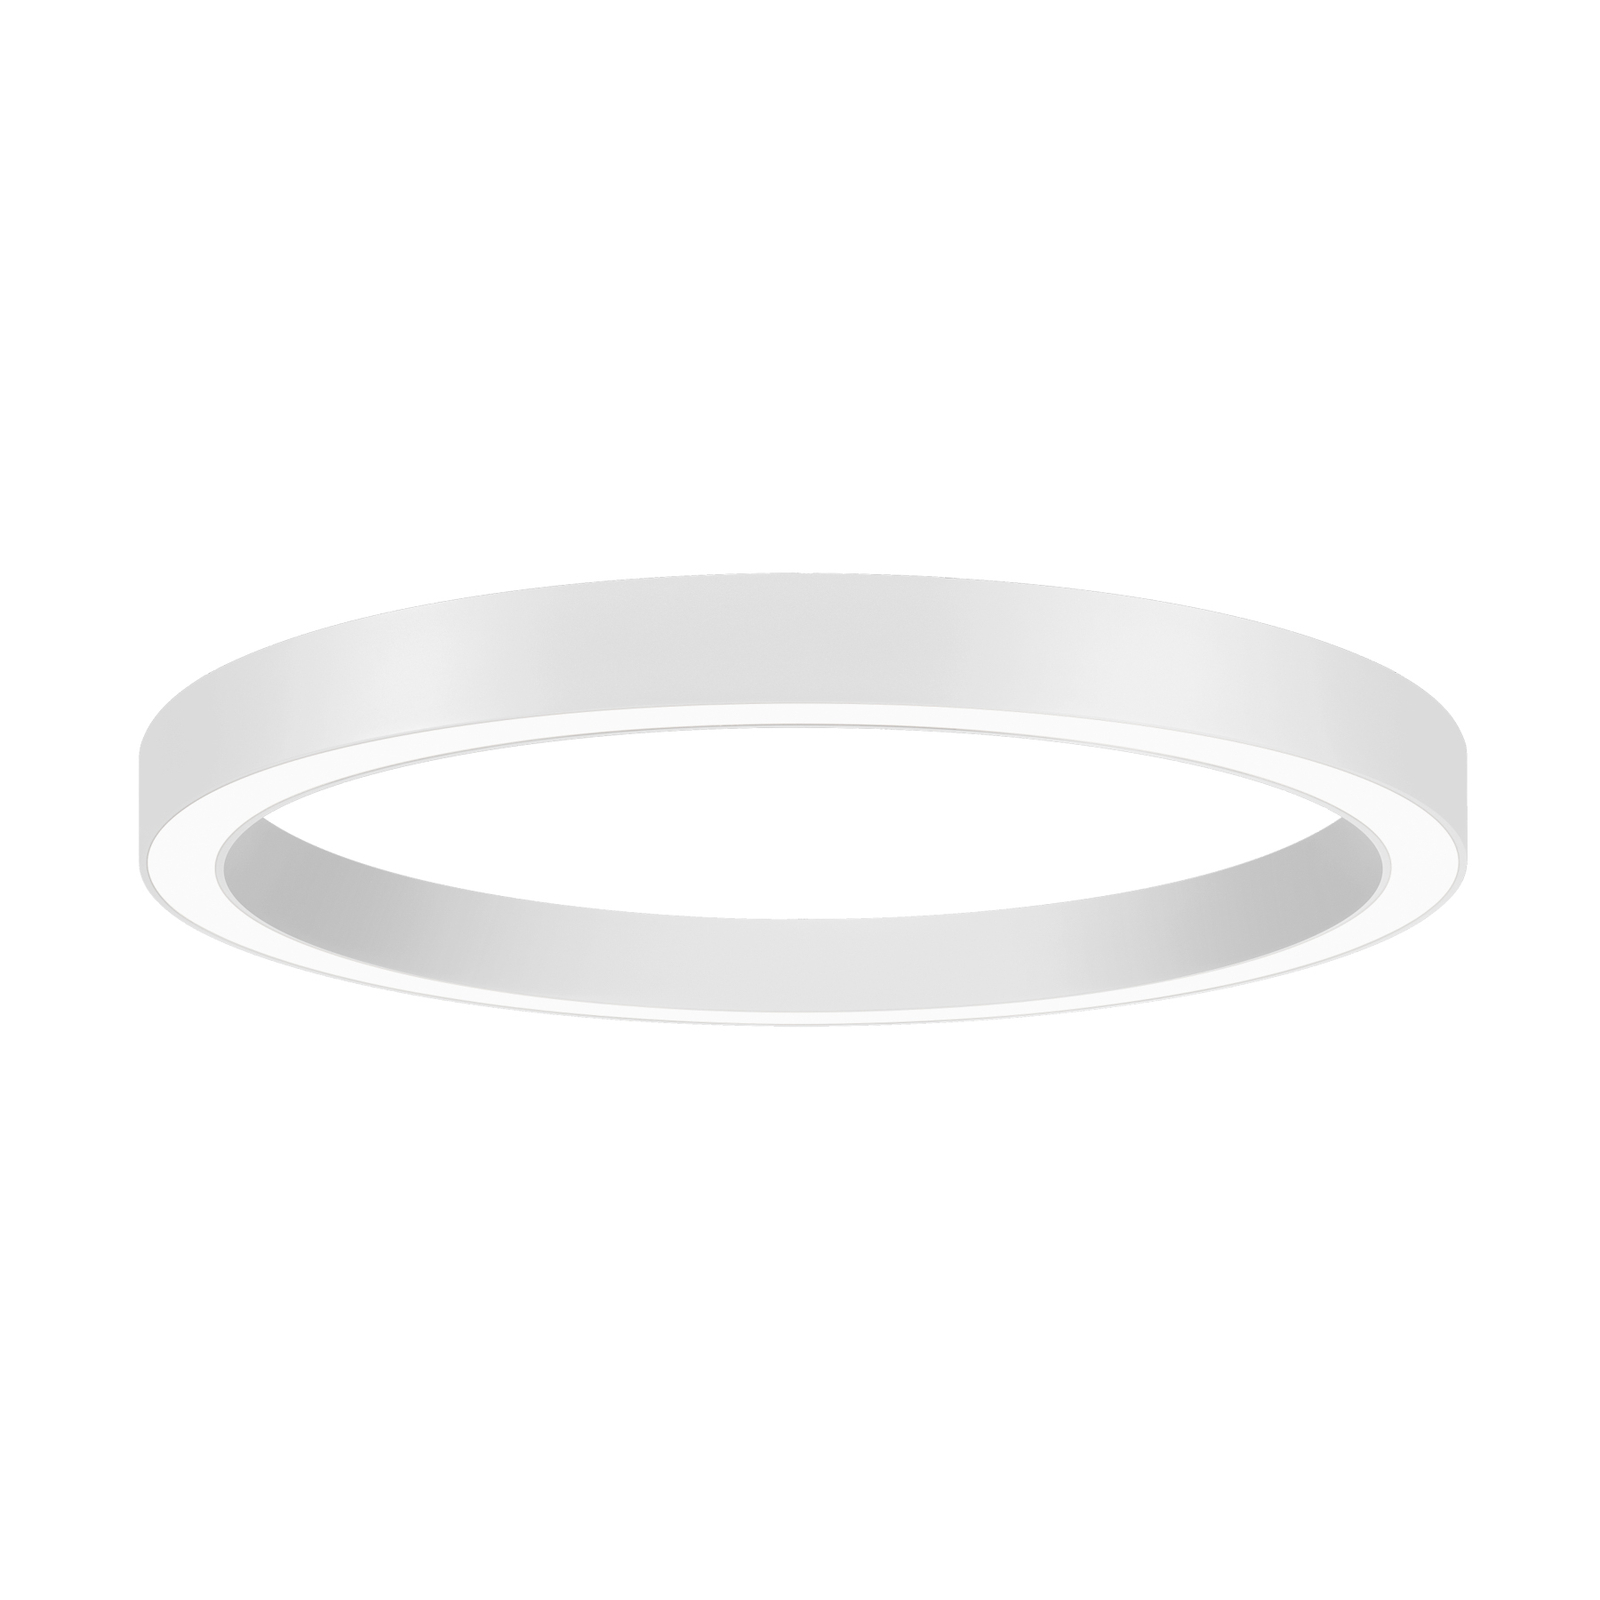 BRUMBERG Biro Circle Ring, Ø 60 cm, Casambi, blanc, 830